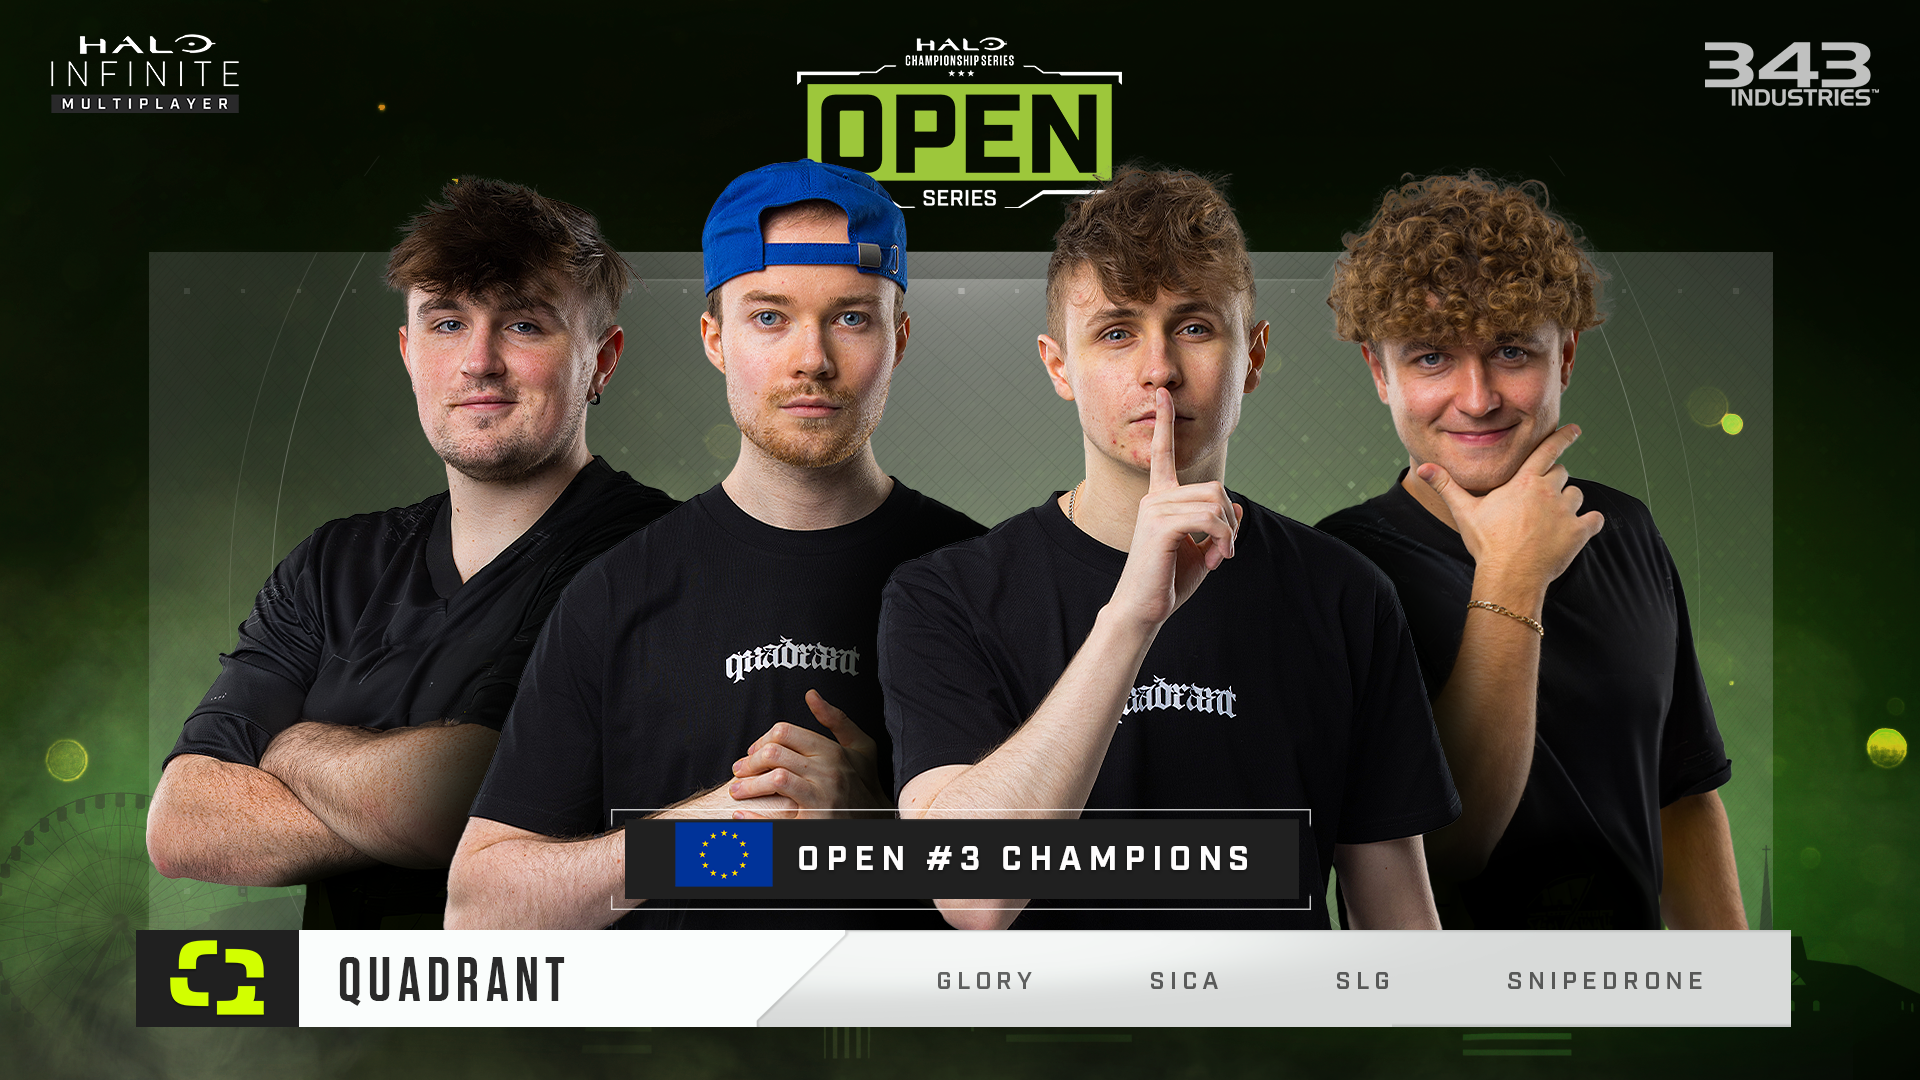 H C S Open Series Europe Open #3 Champions, Quadrant.